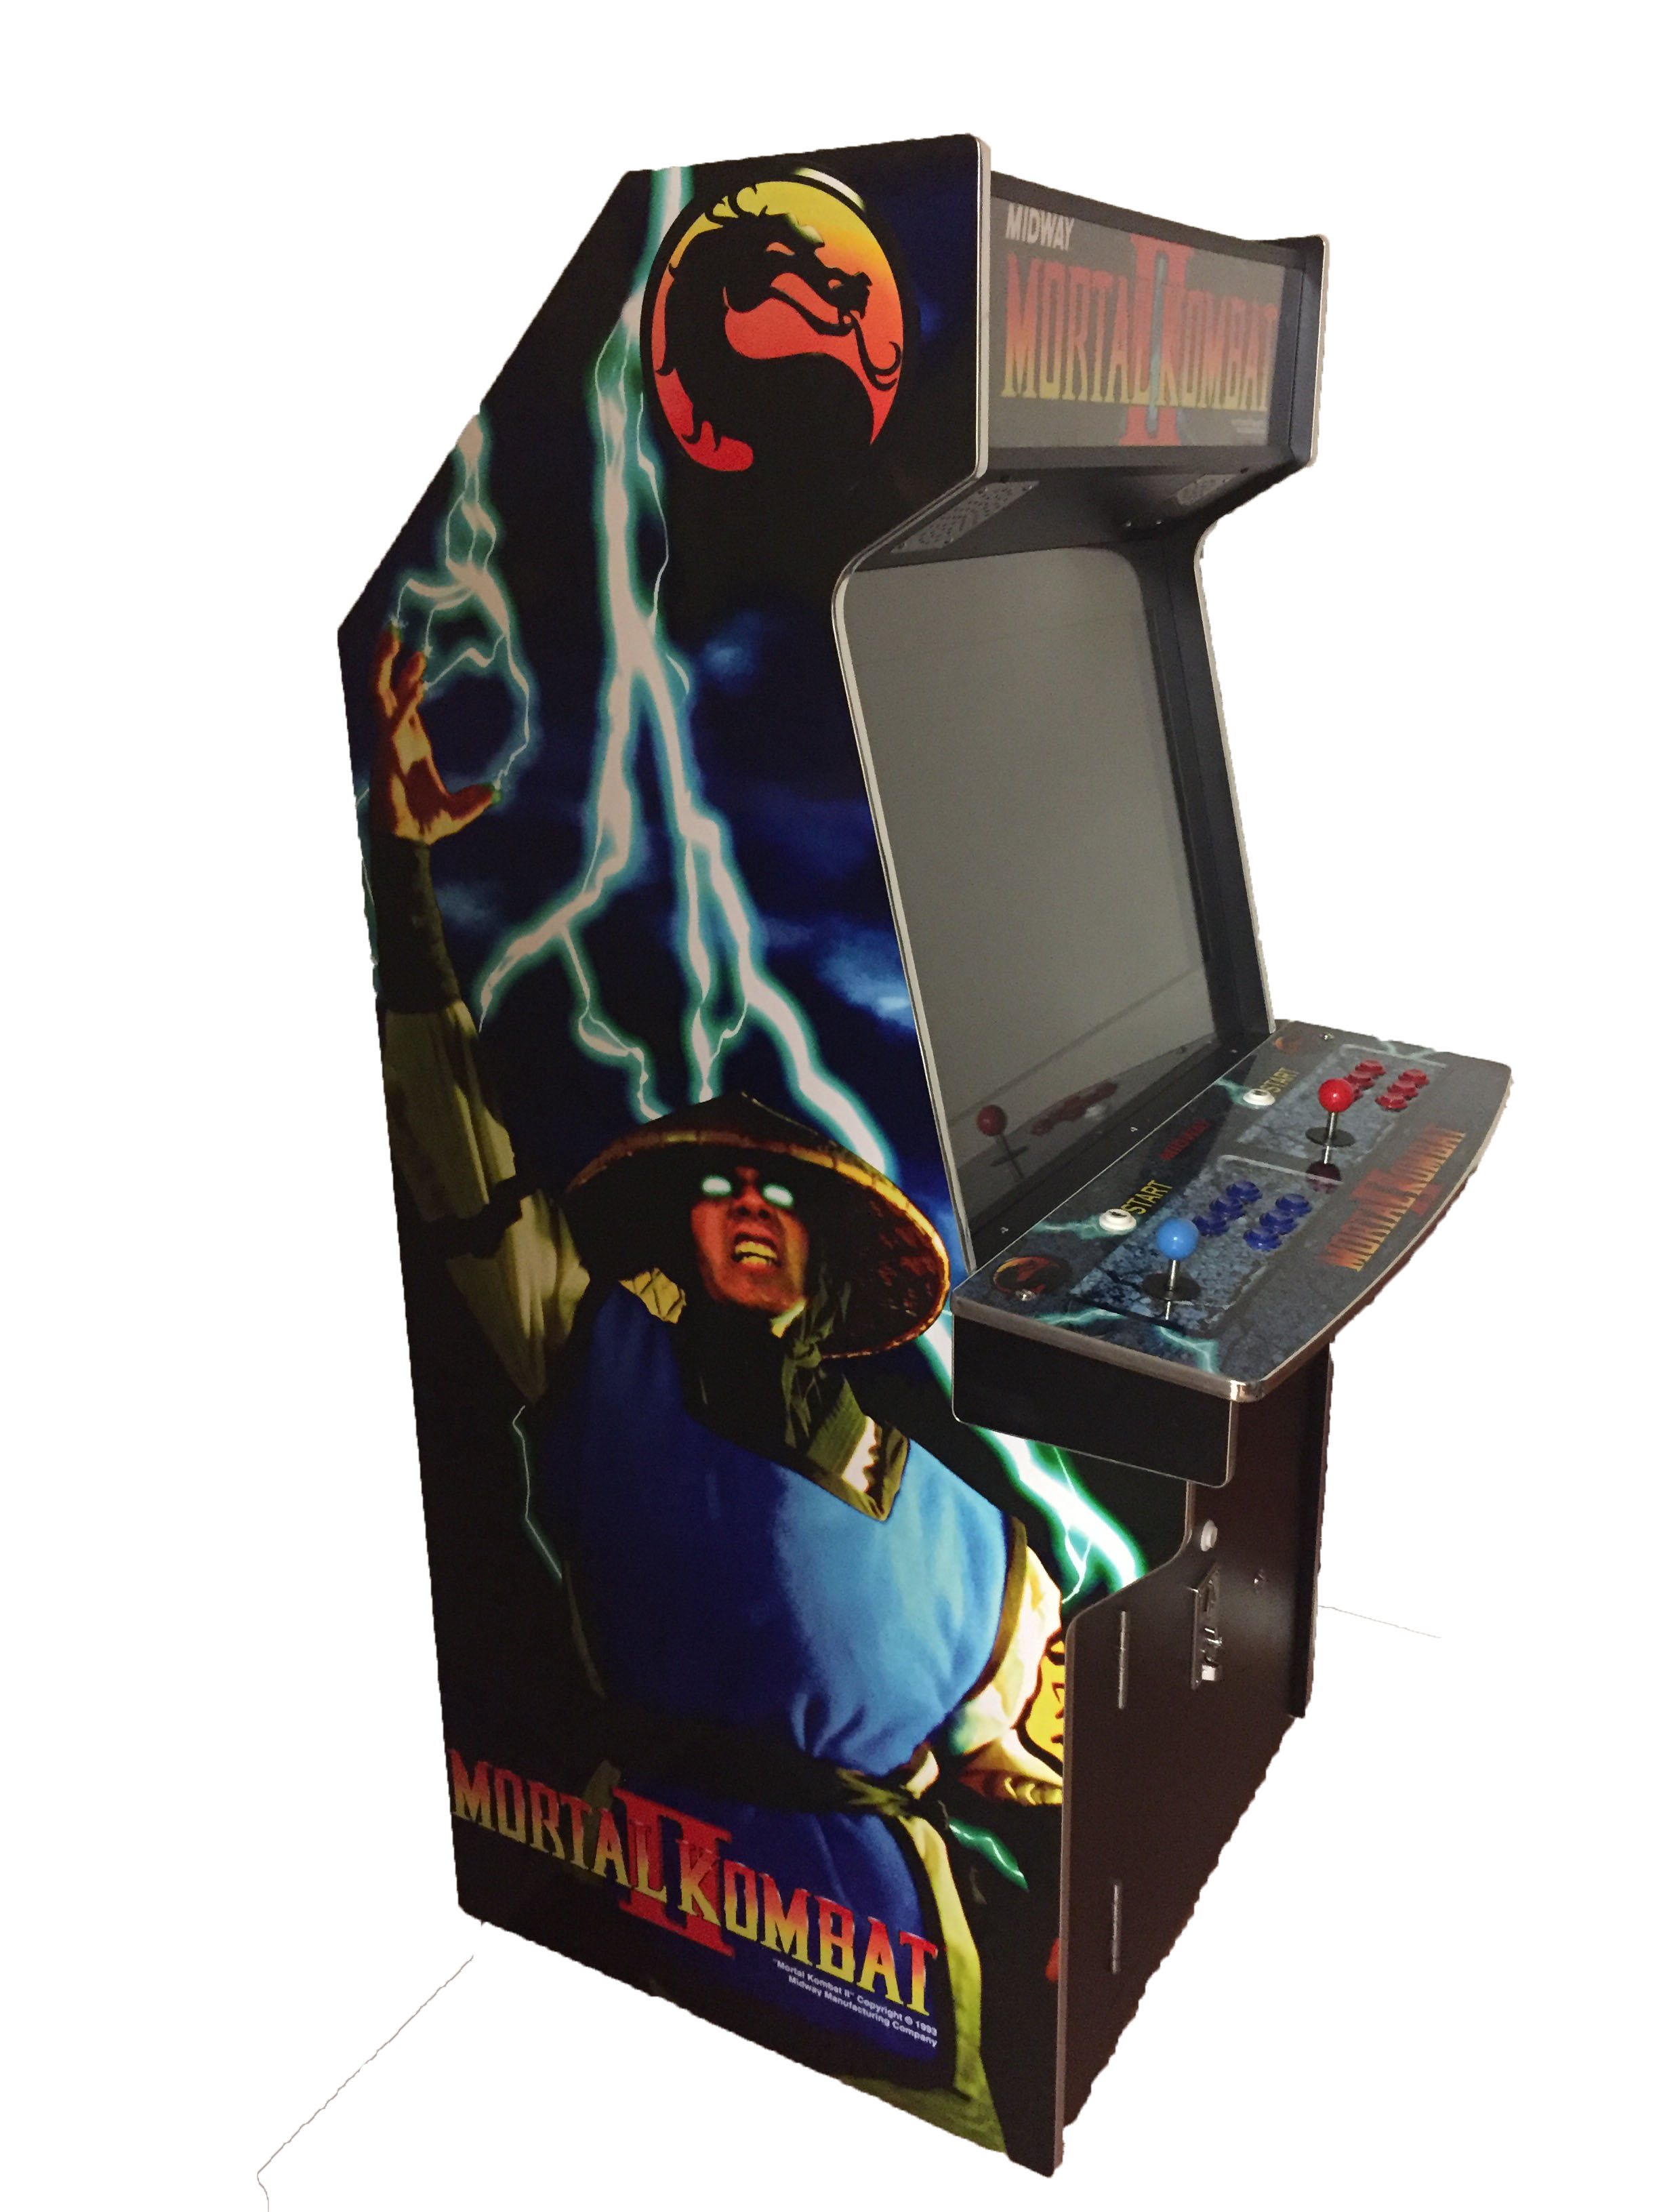 Arcade Rewind 3500 Game Upright Arcade Machine Mortal Kombat 2